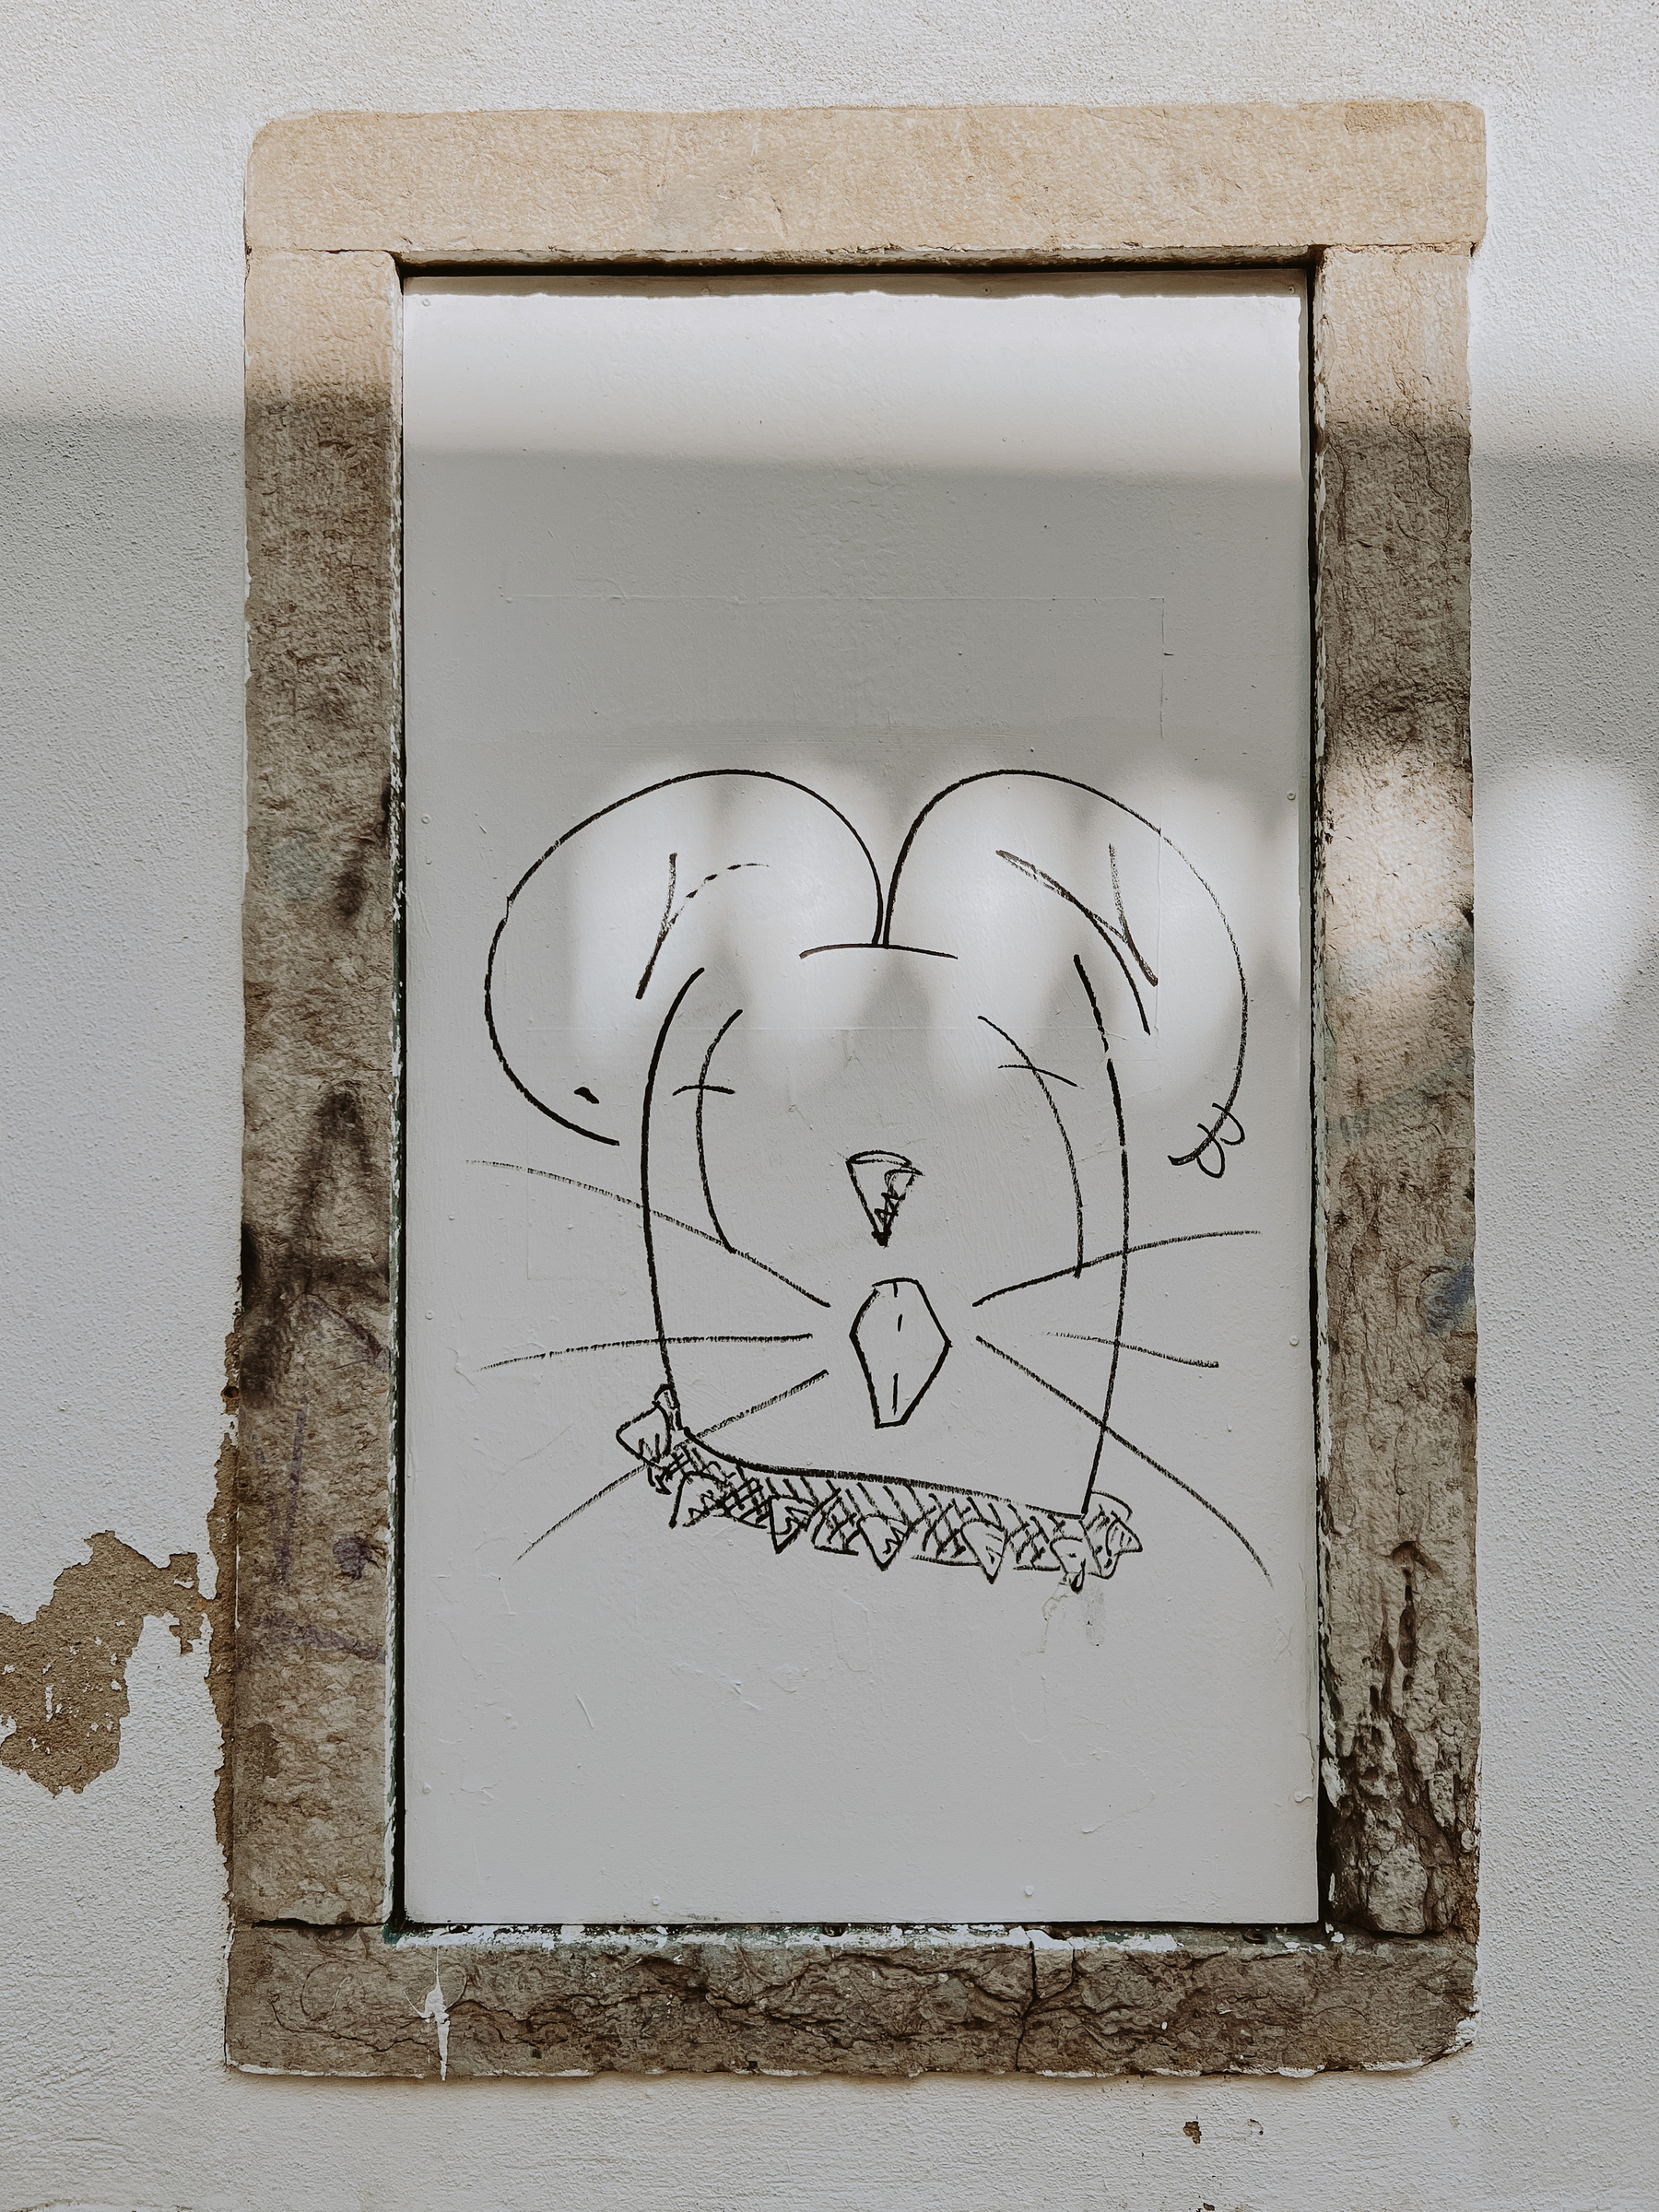 A cartoony mouse drawn on a wall. 